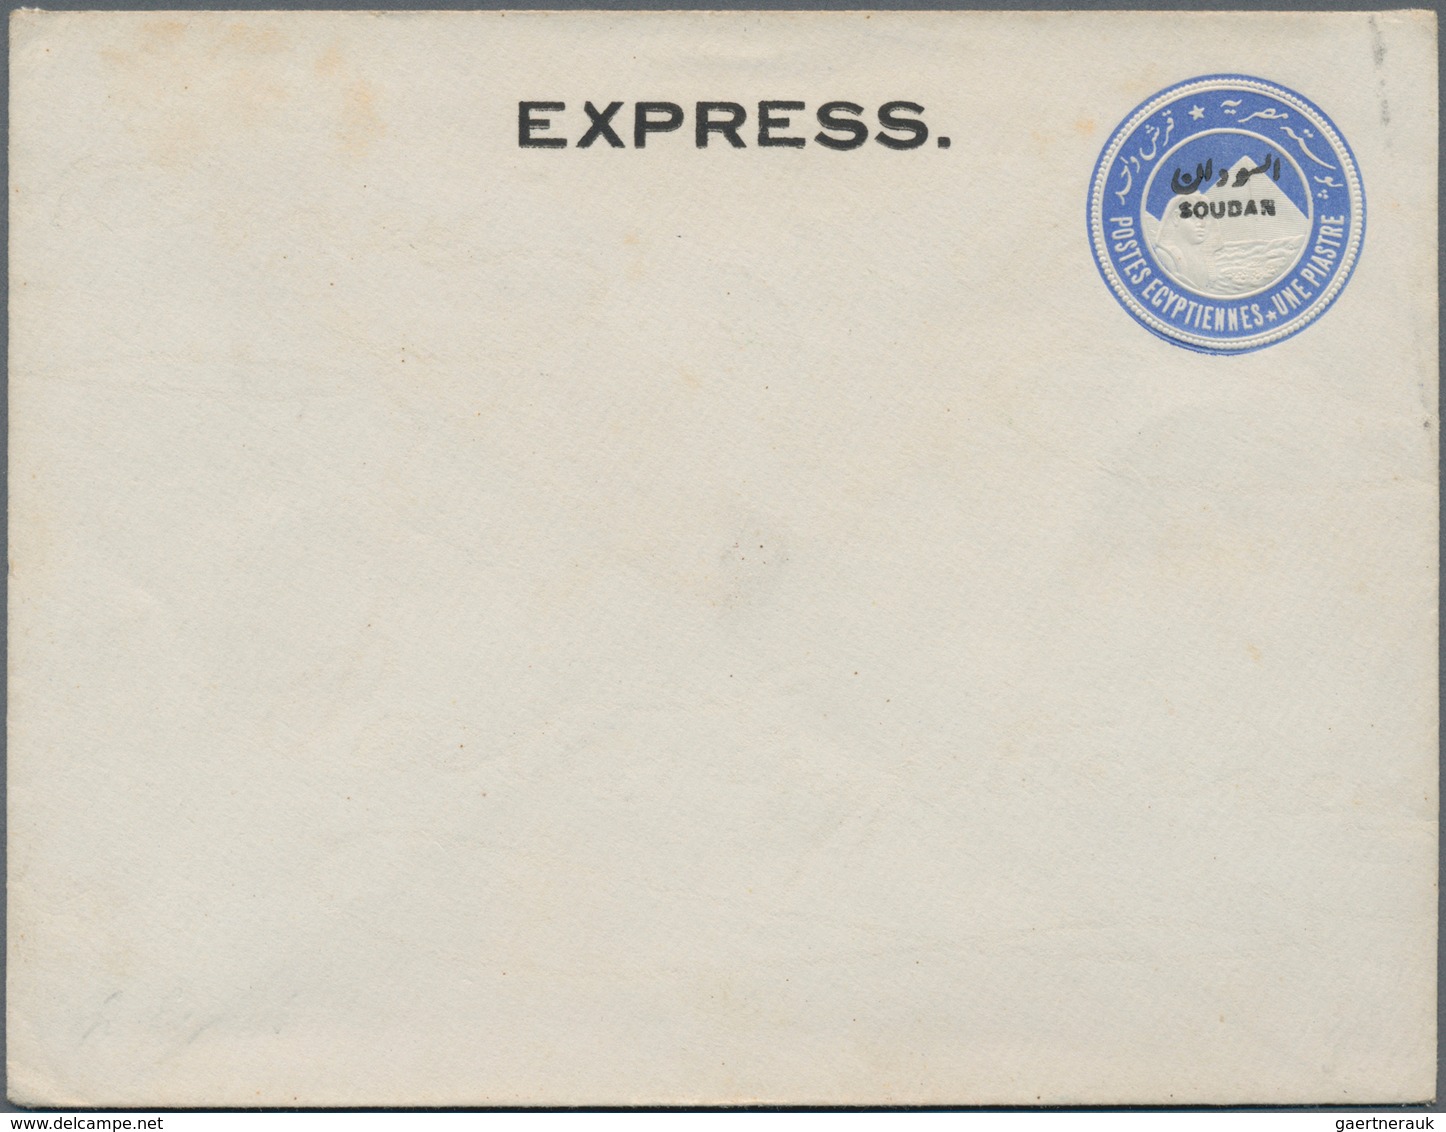 Sudan - Ganzsachen: 1897, 1 Pia Ultramarine Pse With Horizontal Ovp "EXPRESS.", Two Mint Envelopes W - Sudan (1954-...)